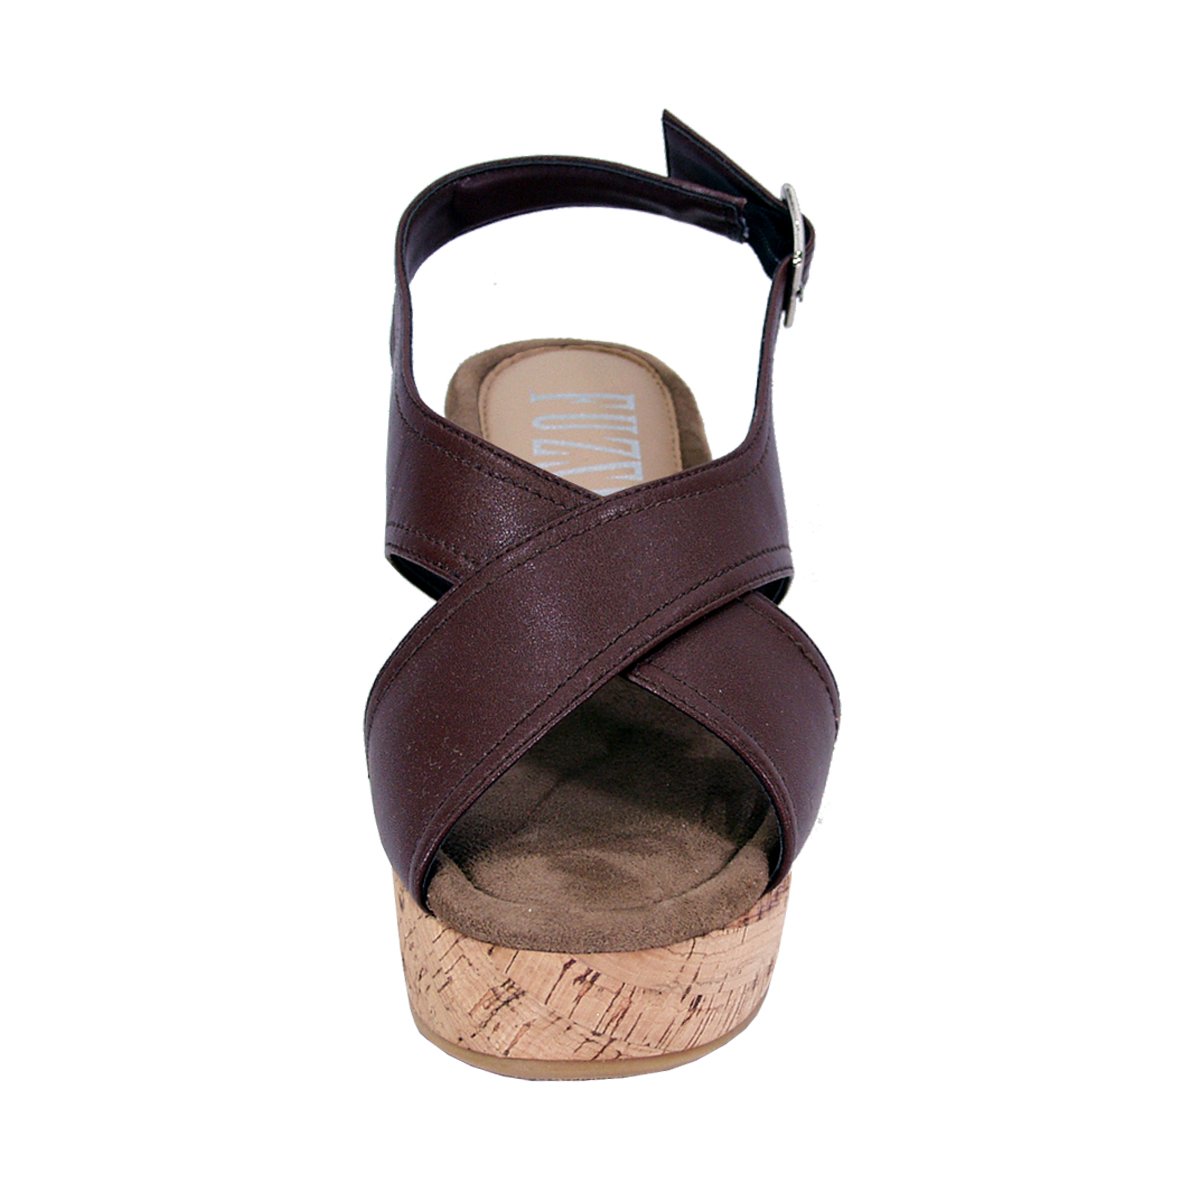 FUZZY Anya Women's Wide Width Platform Casual Sandals